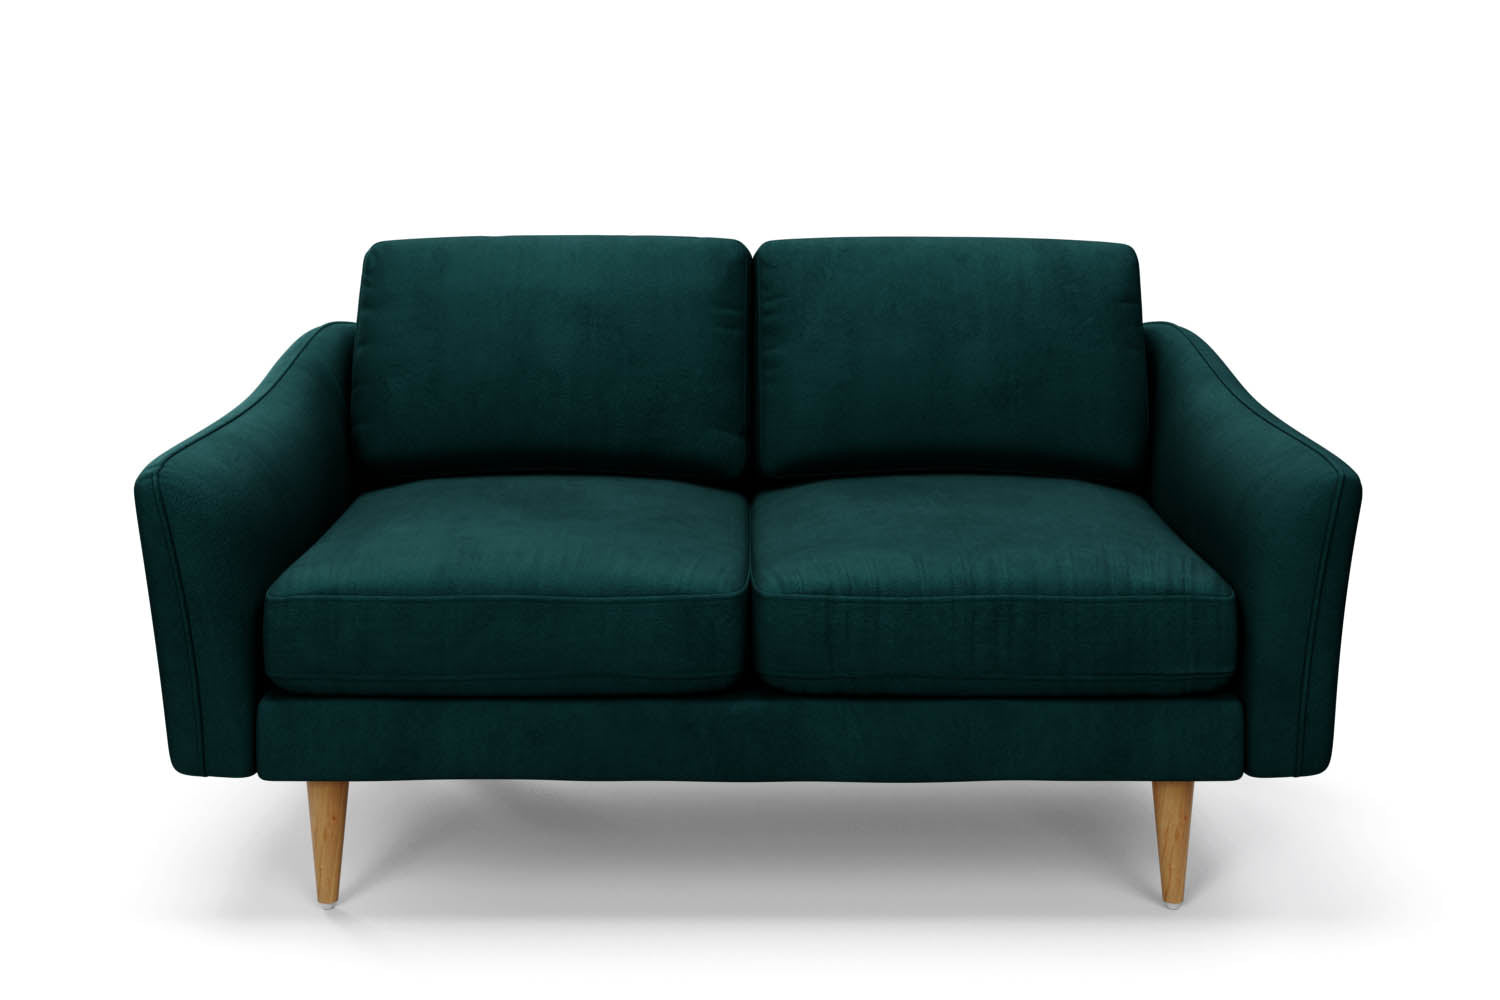 SNUG | The Rebel 2 Seater Sofa in Pine Green variant_40837198413872